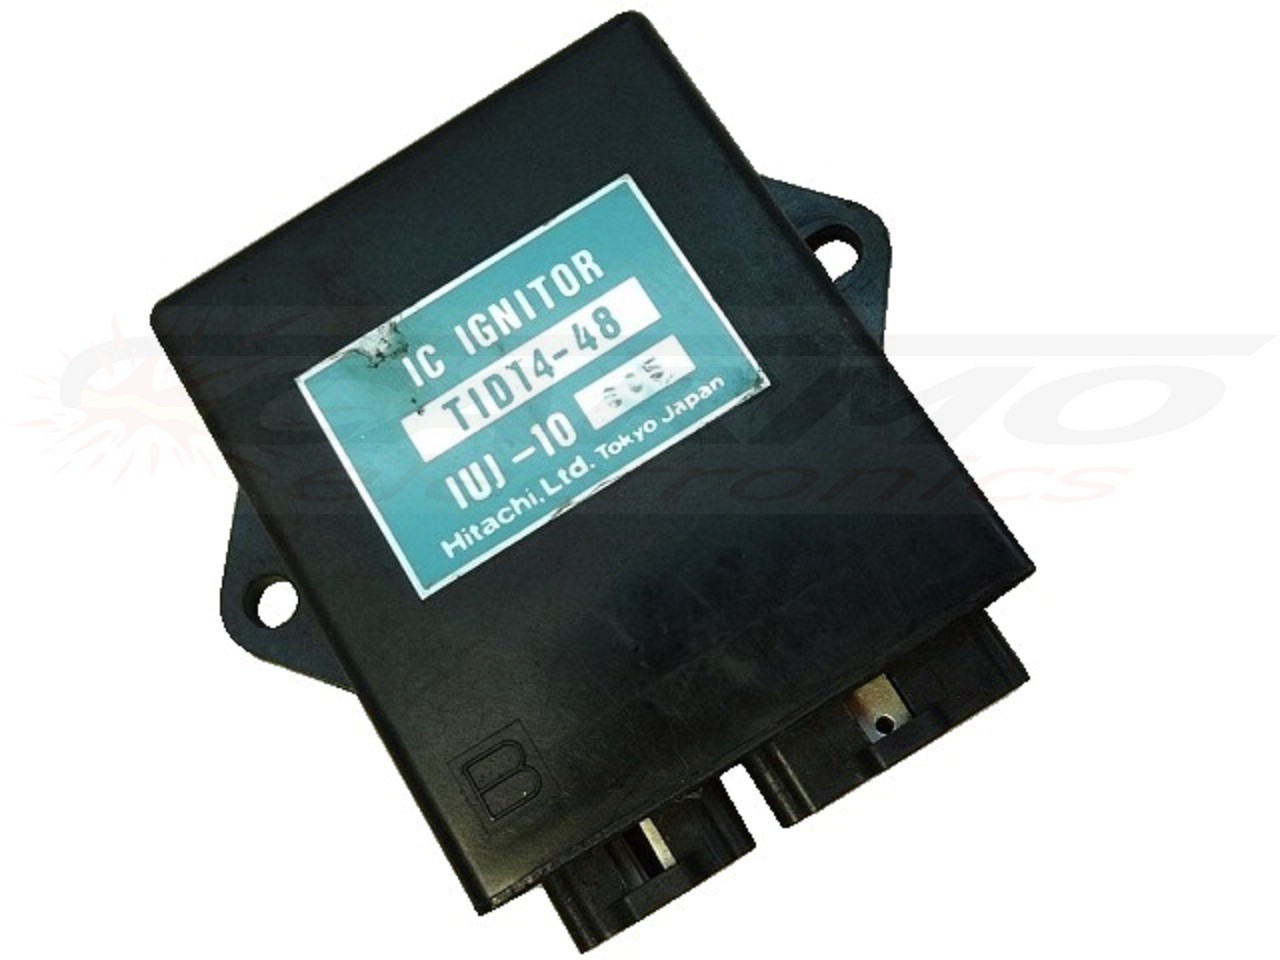 XJ600 Radian FZ600 TCI CDI dispositif de commande boîte noire (TID14-48, IUJ-10)